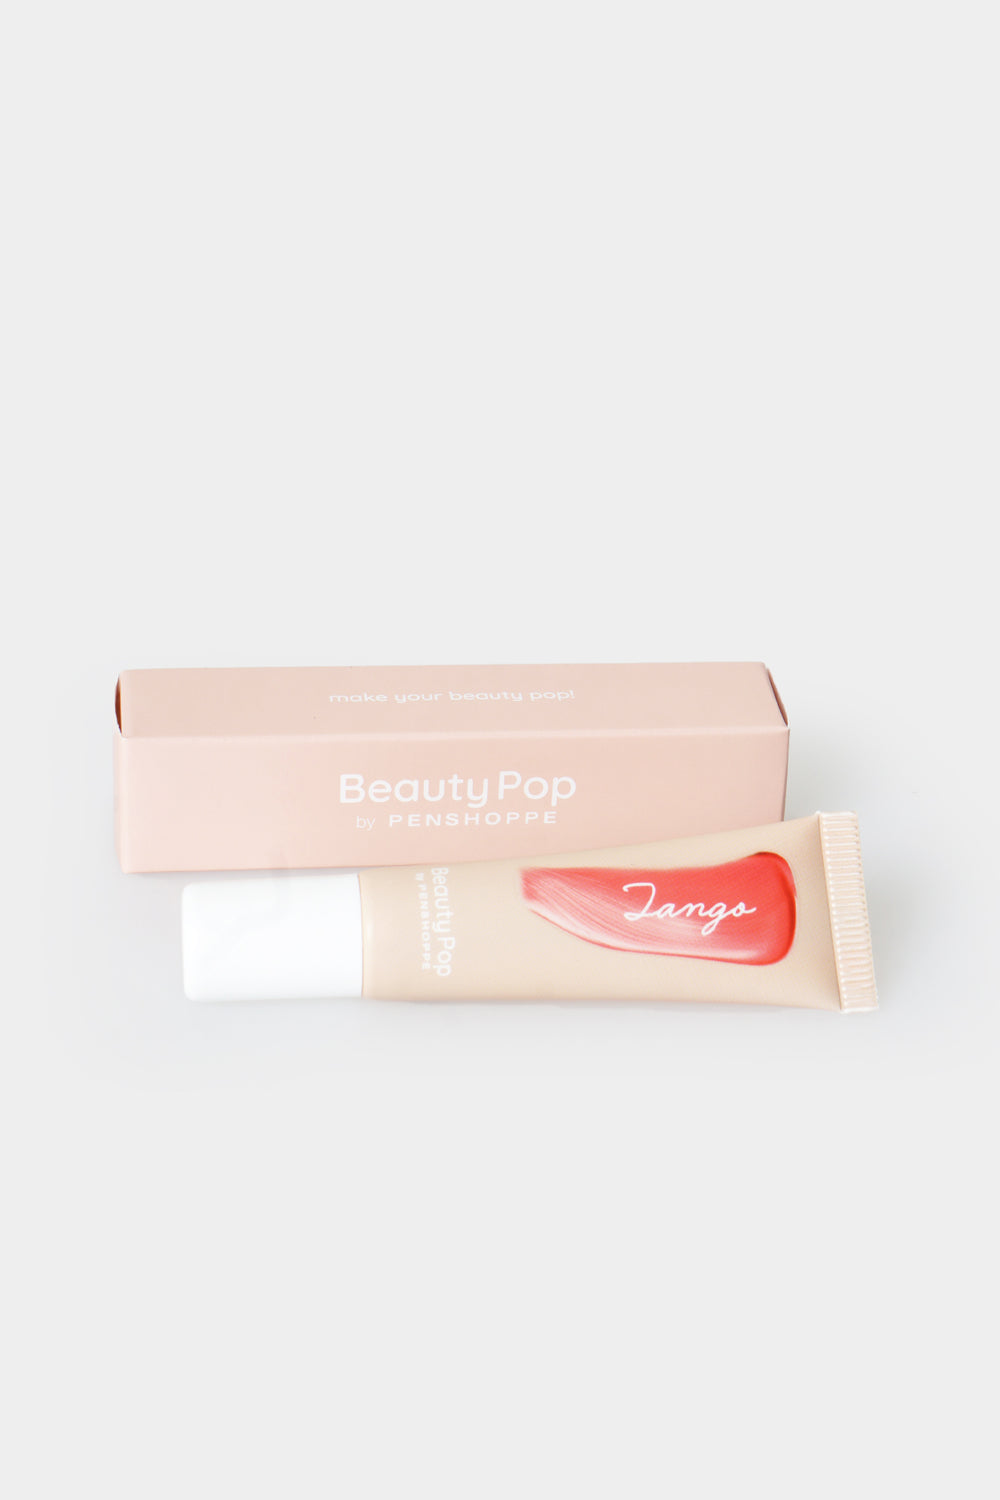 Penshoppe Beauty Pop Cream Blush In Tango